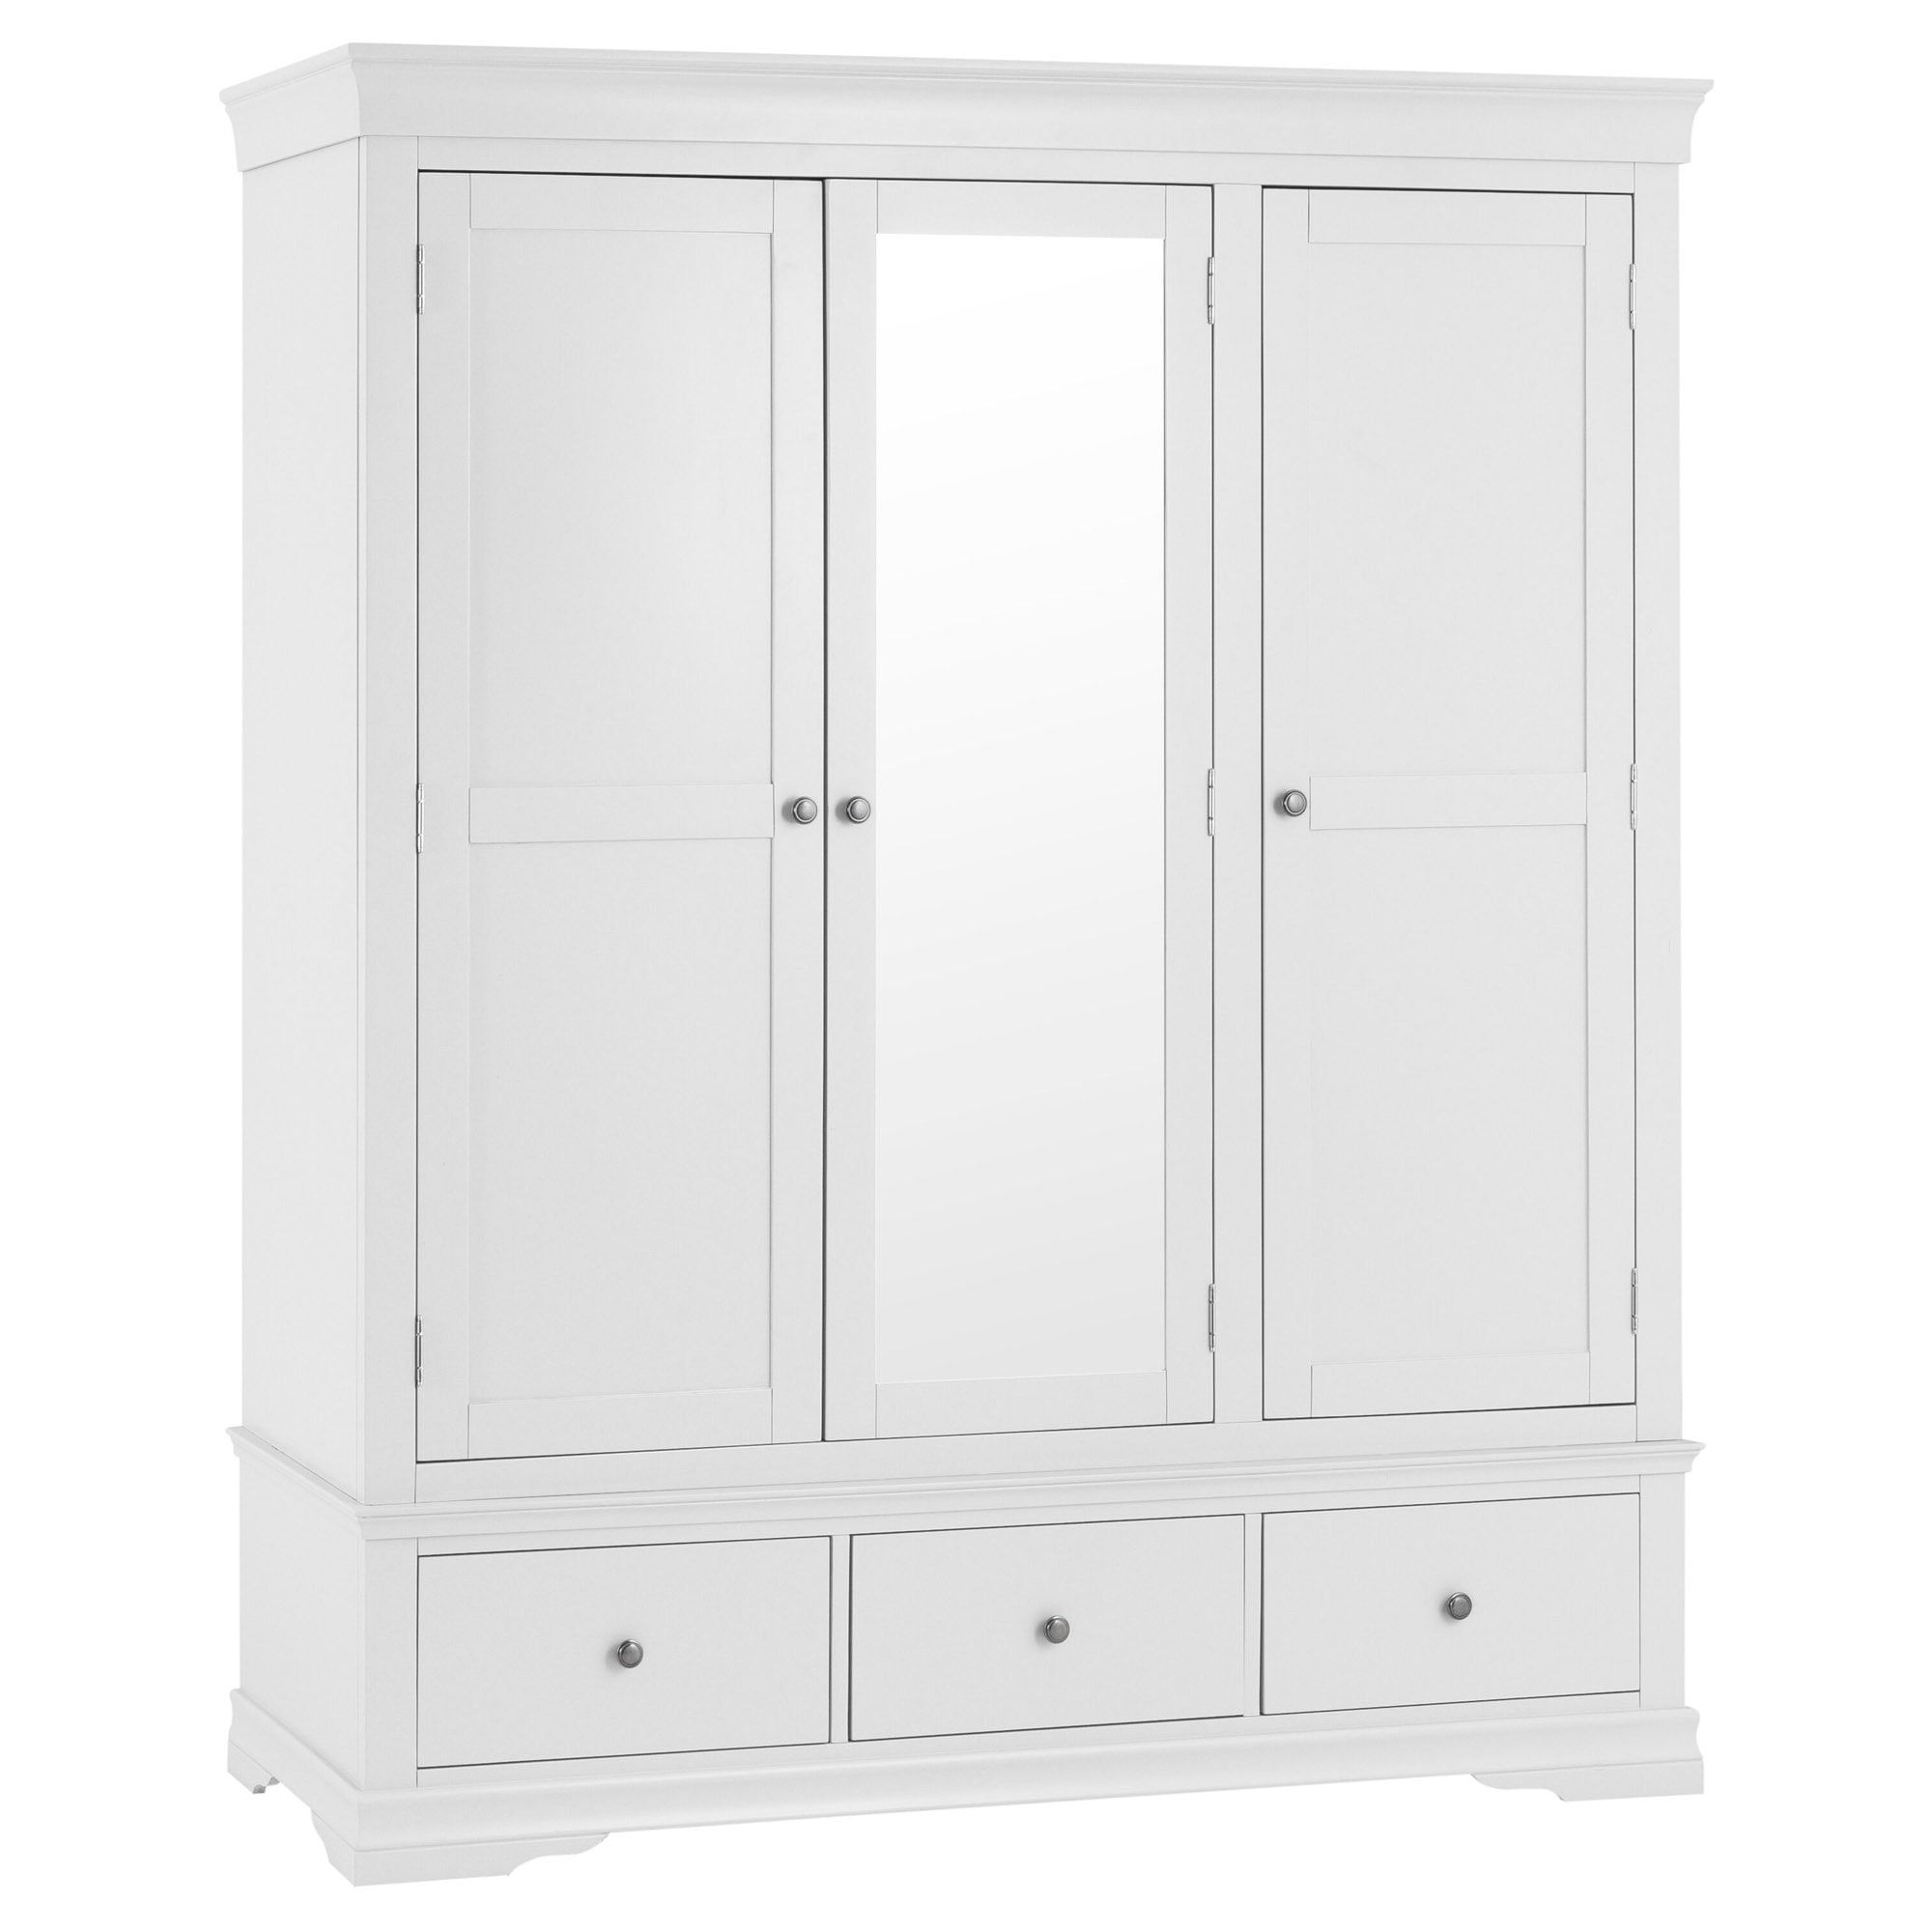 Swindon White 3 Door 3 Drawer Wardrobe | White Wardrobe | White Wooden  Wardrobe With Regard To White Wood Wardrobes (Photo 6 of 15)